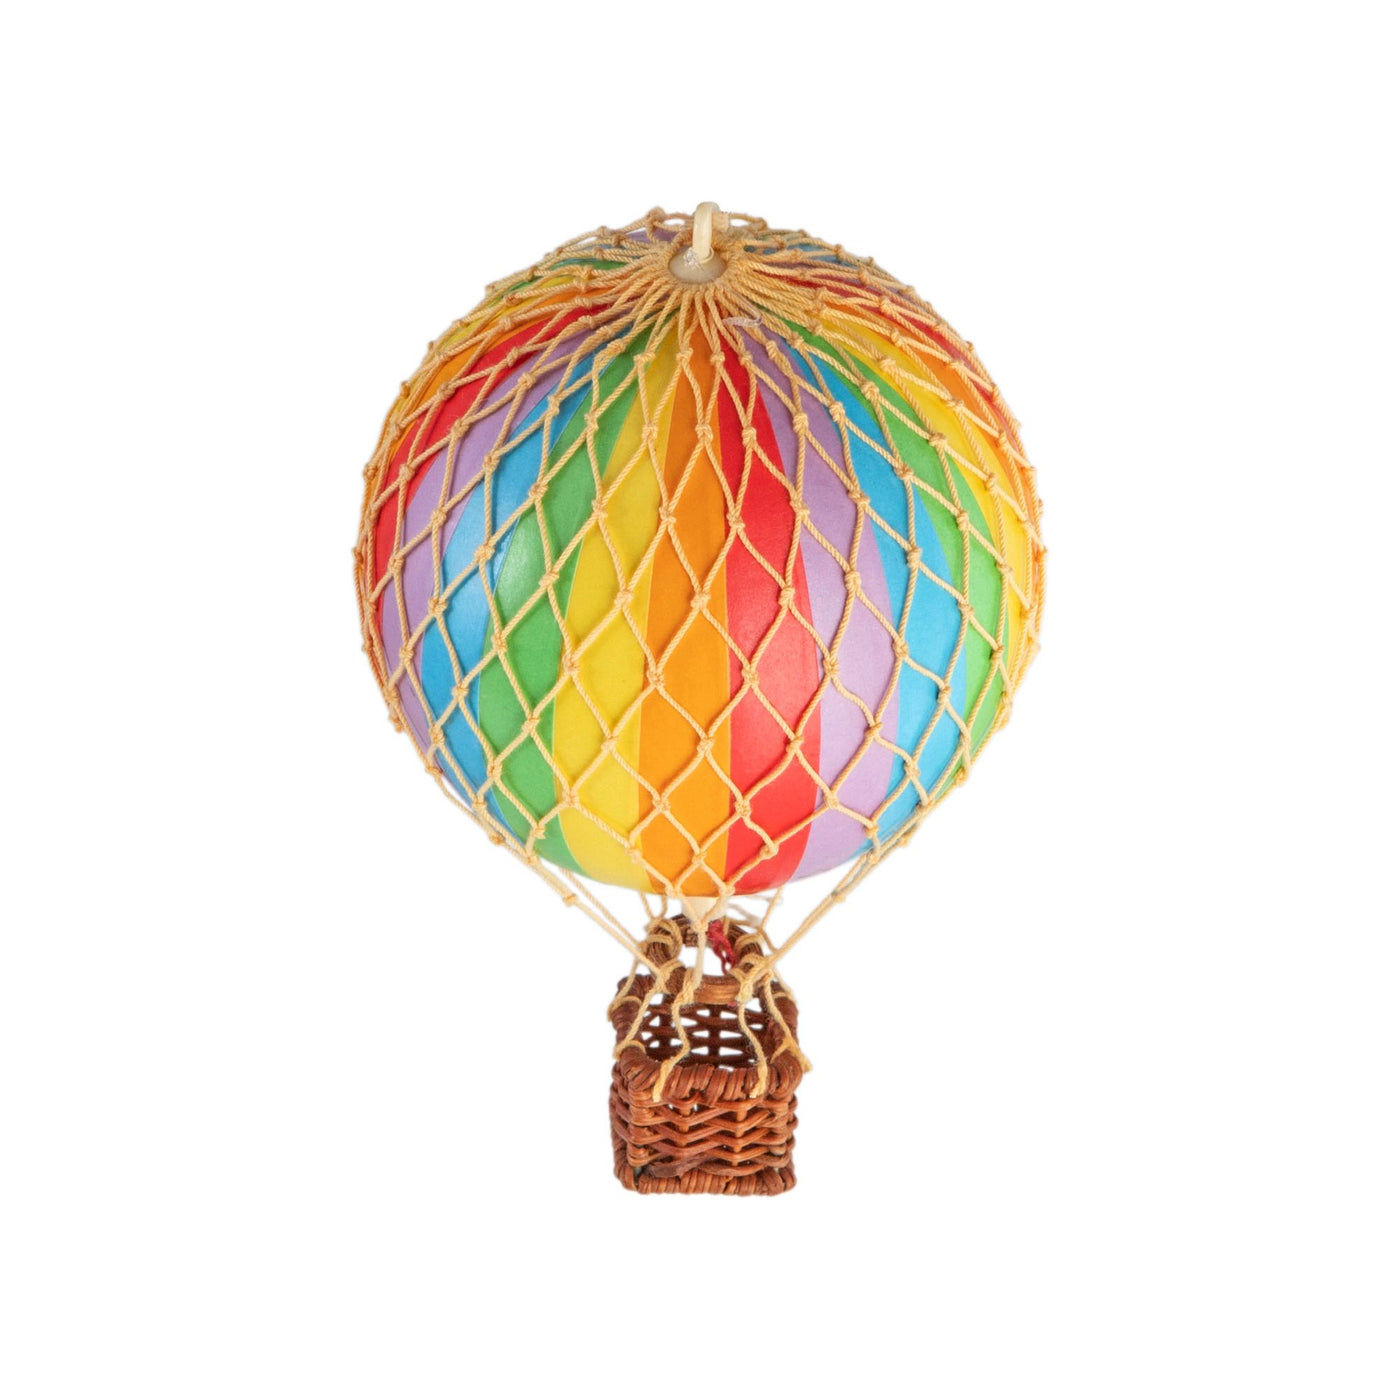 Luftballon Rainbow, 8,5 cm. Floating The Skies, Authentic Models 